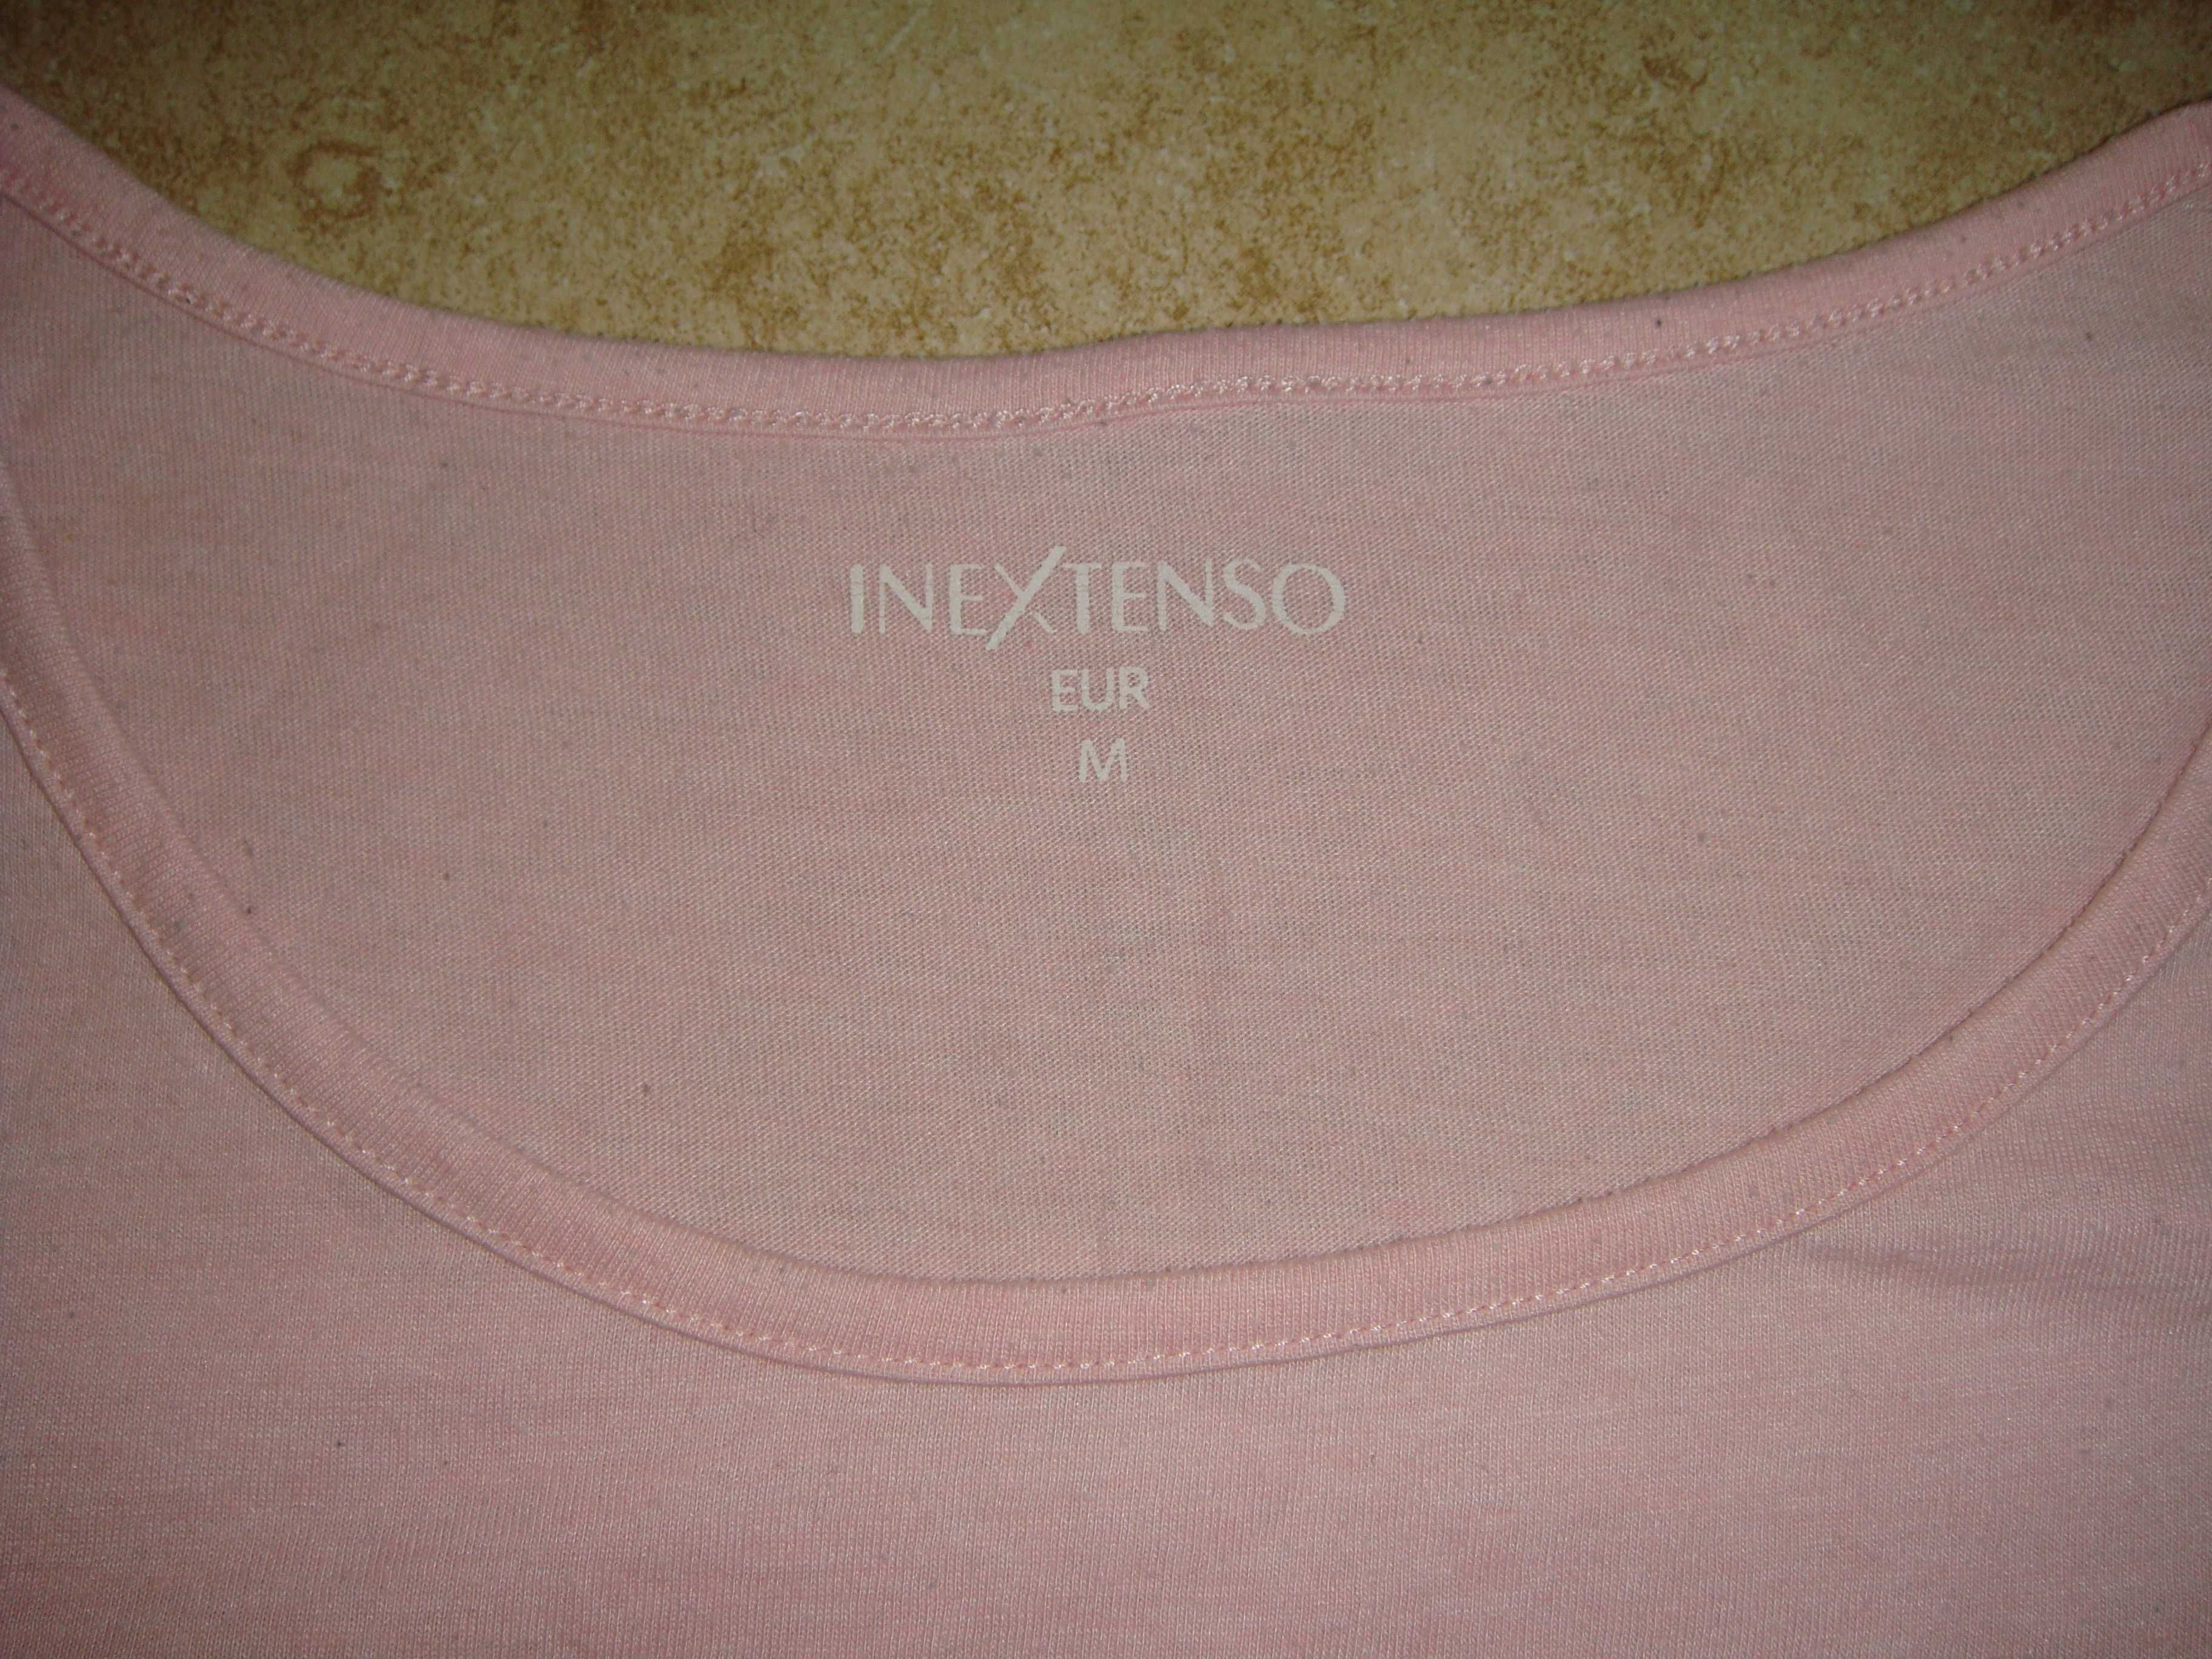 Женская трикотажная ночная рубашка ночнушка INEXTENSO наш 44-46 M